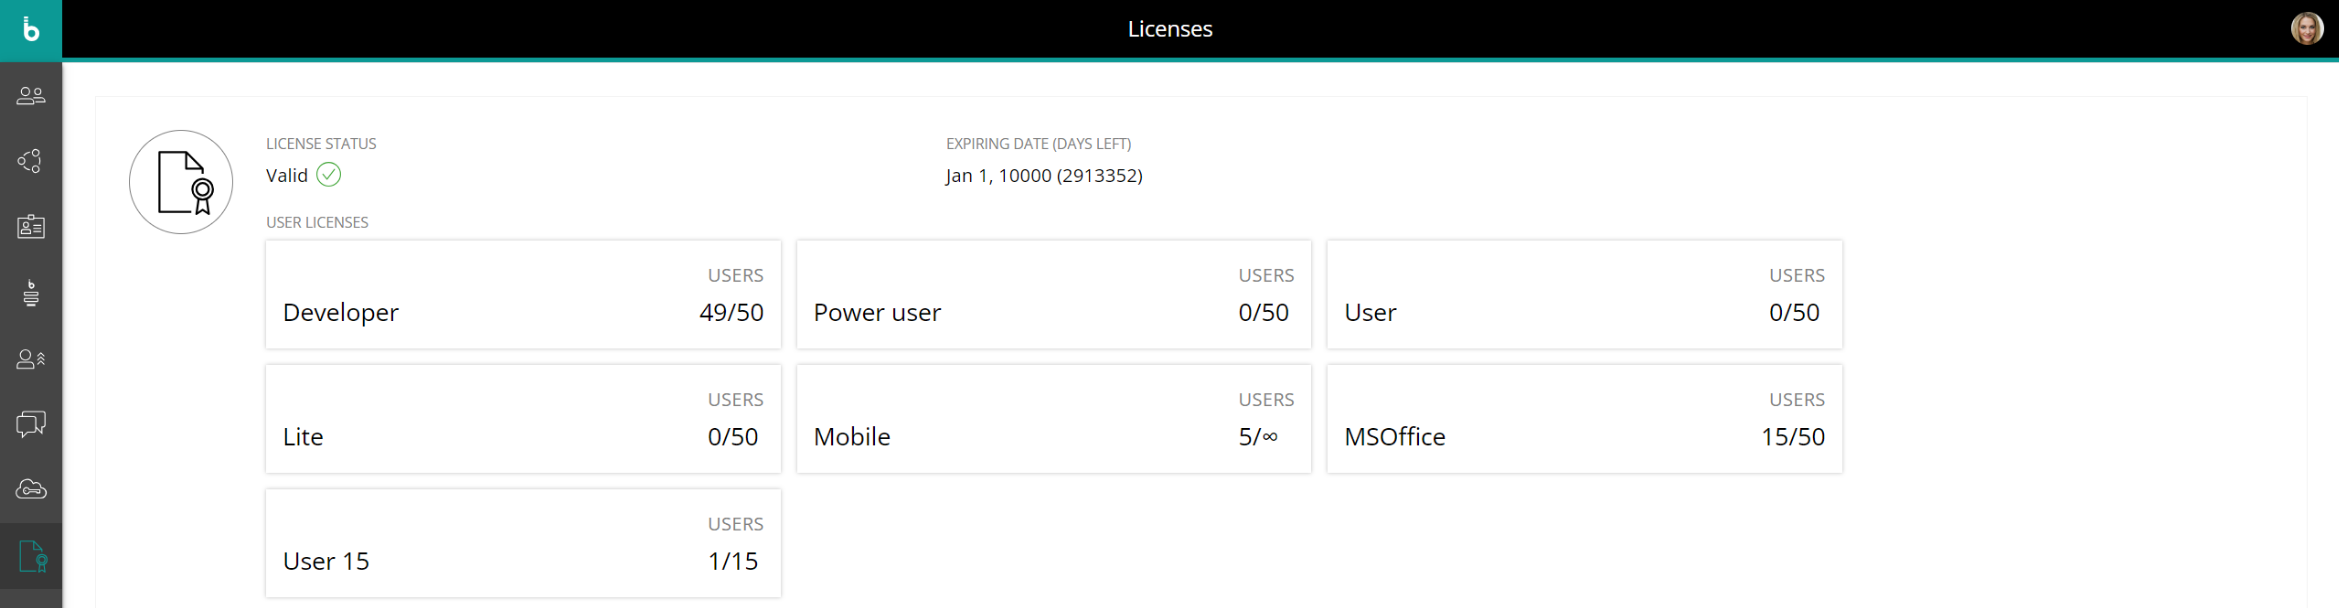 BOARD Licenses Page - User Licenses